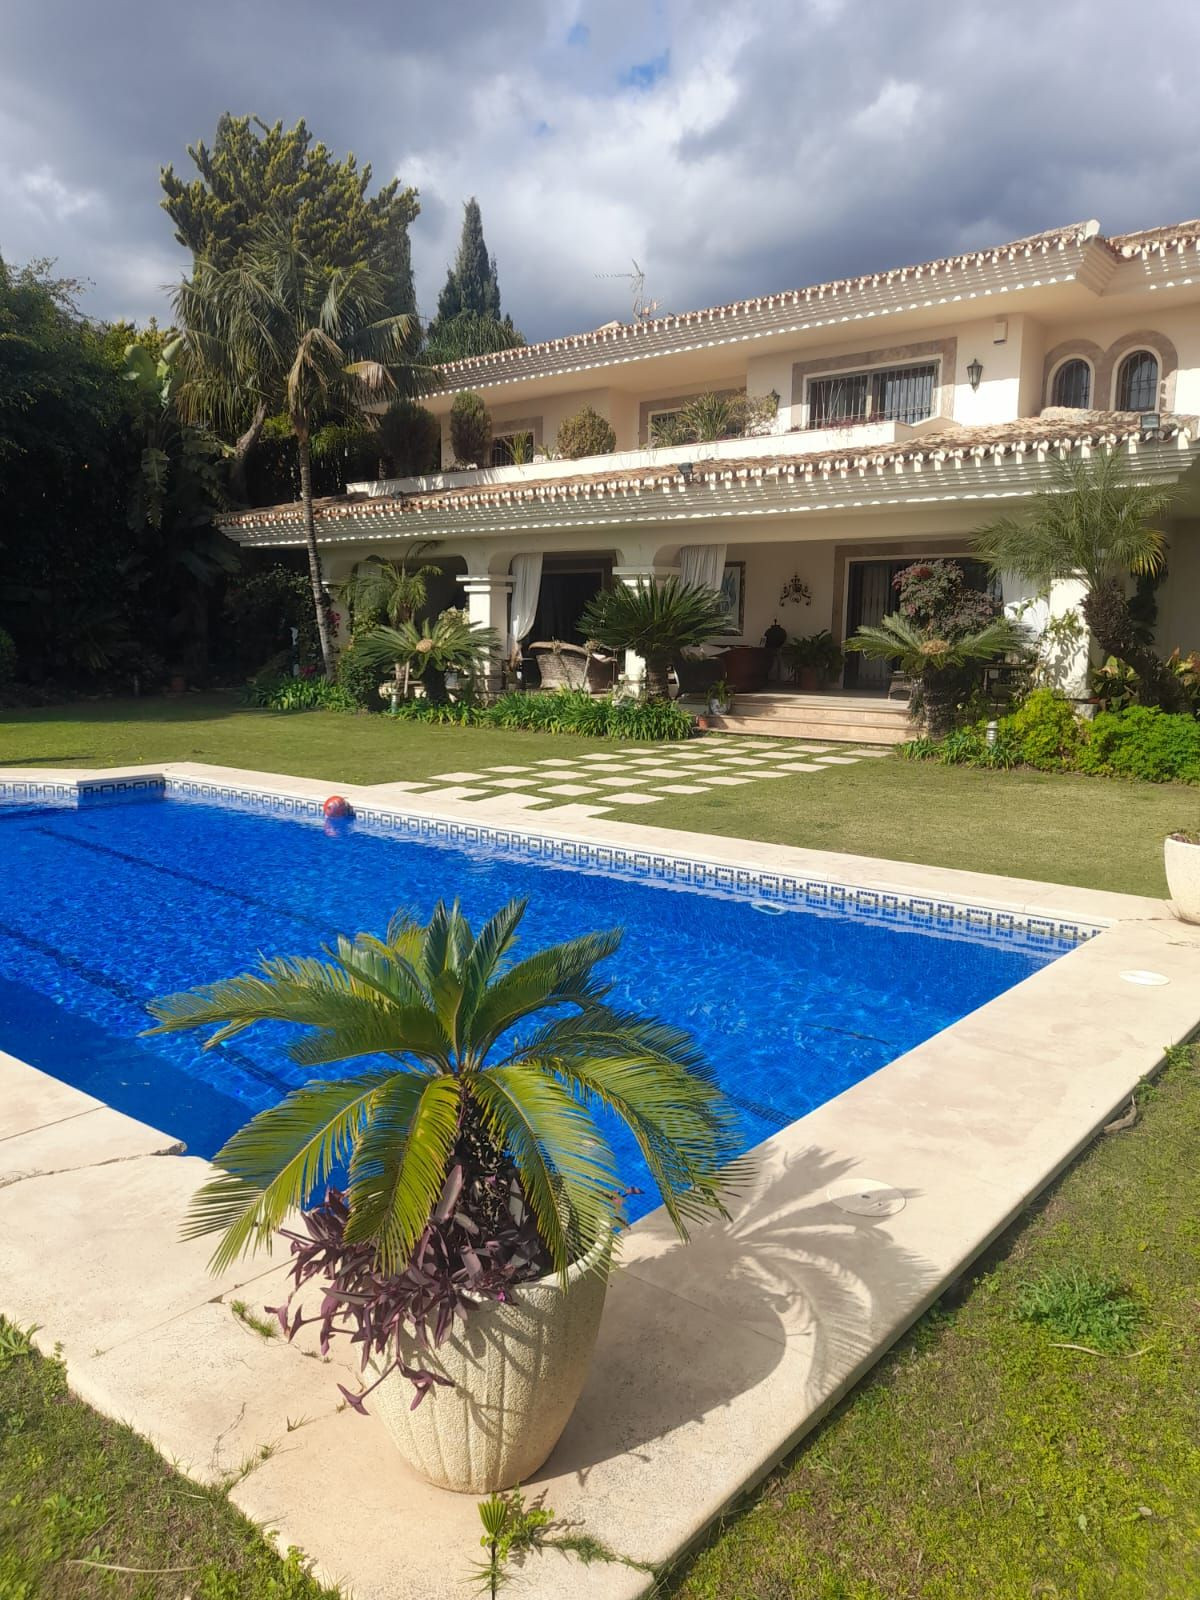 						Villa  Detached
													for sale 
																			 in Marbella
					